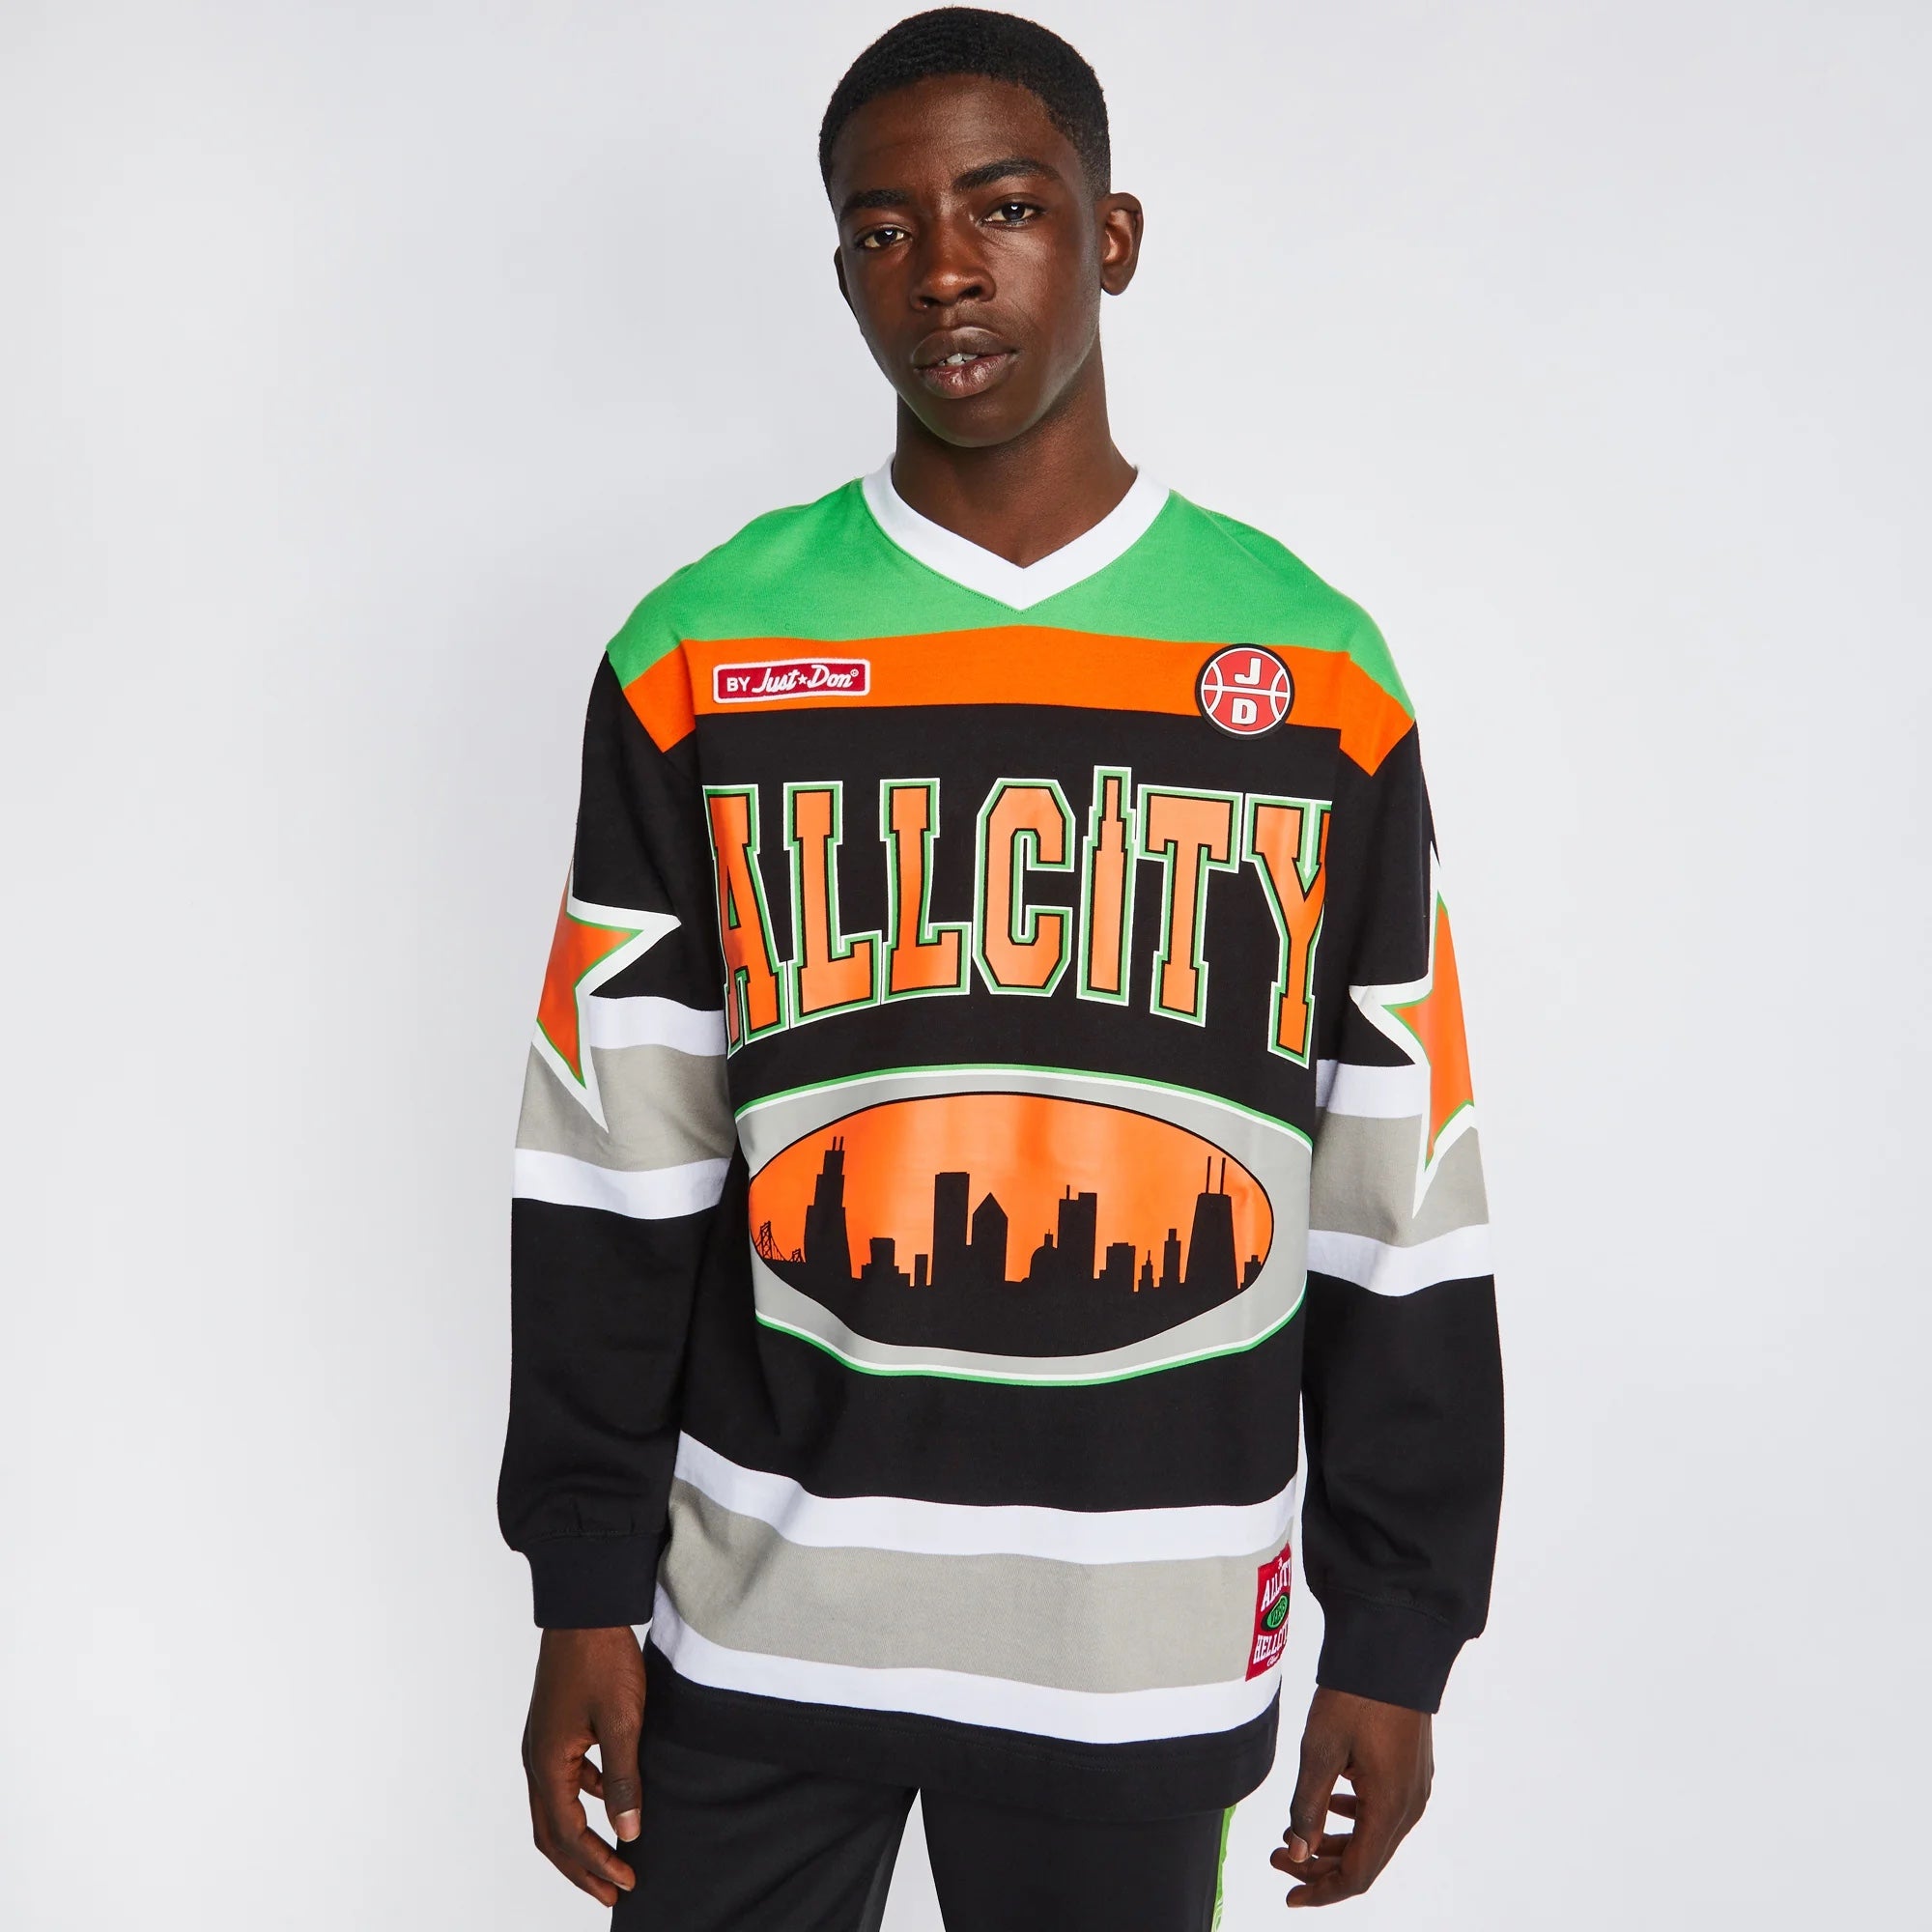 These glow in the dark jerseys are tough 🔥 (📸 uoflequipment/X,  @louisvillefb)